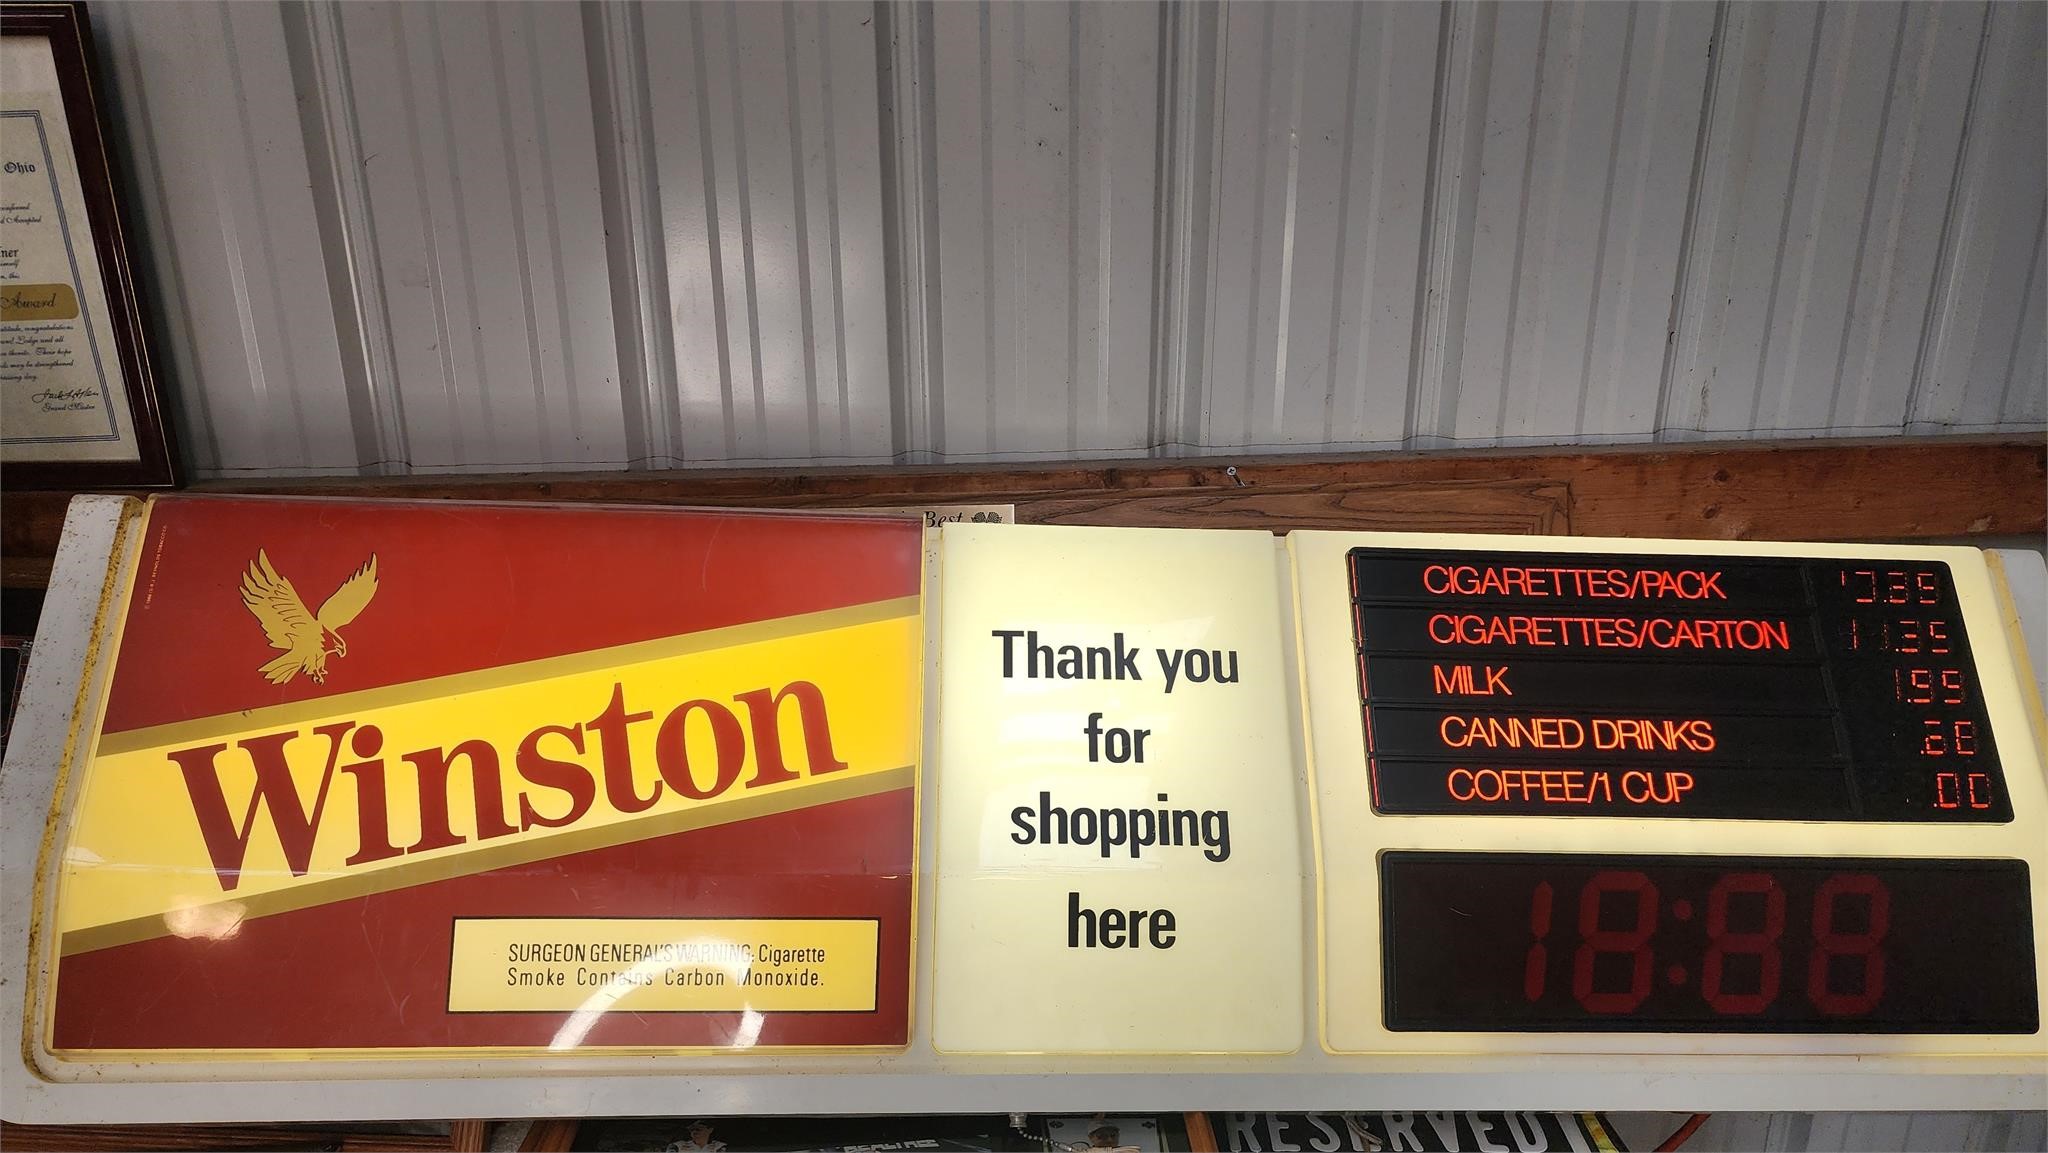 Winston Cigarettes Store Display